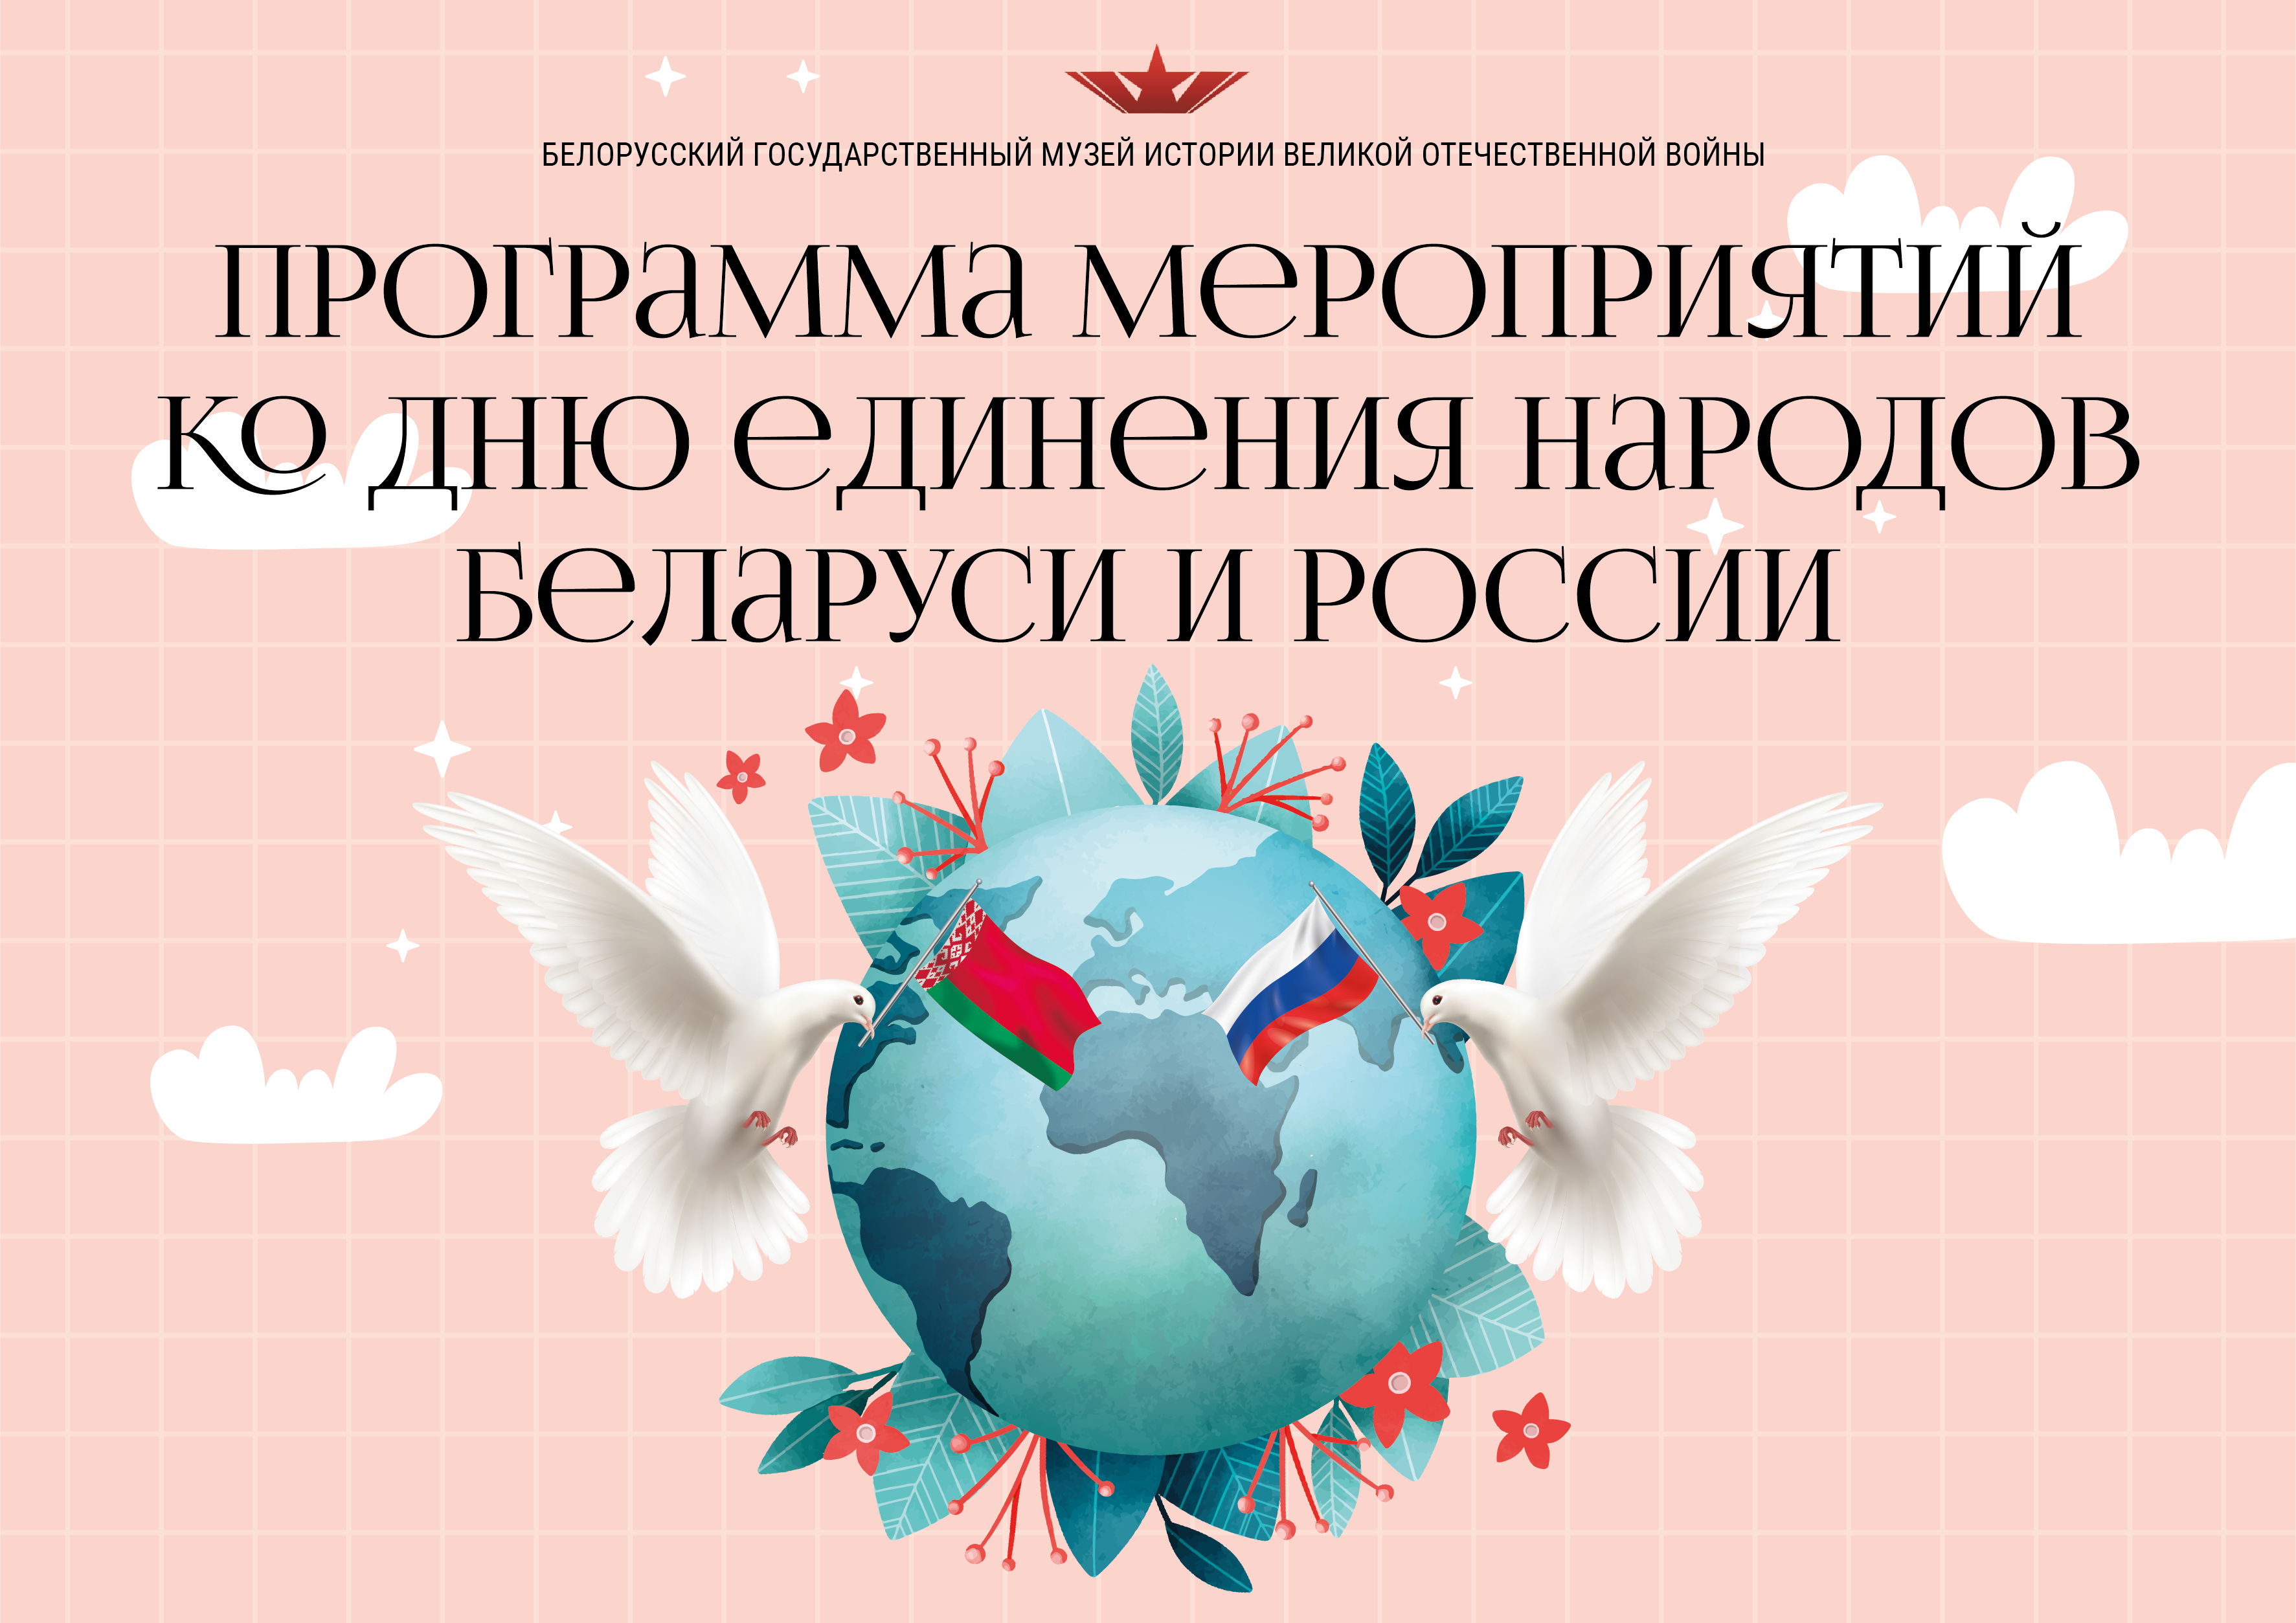 Программа мероприятий ко Дню единения народов Беларуси и России